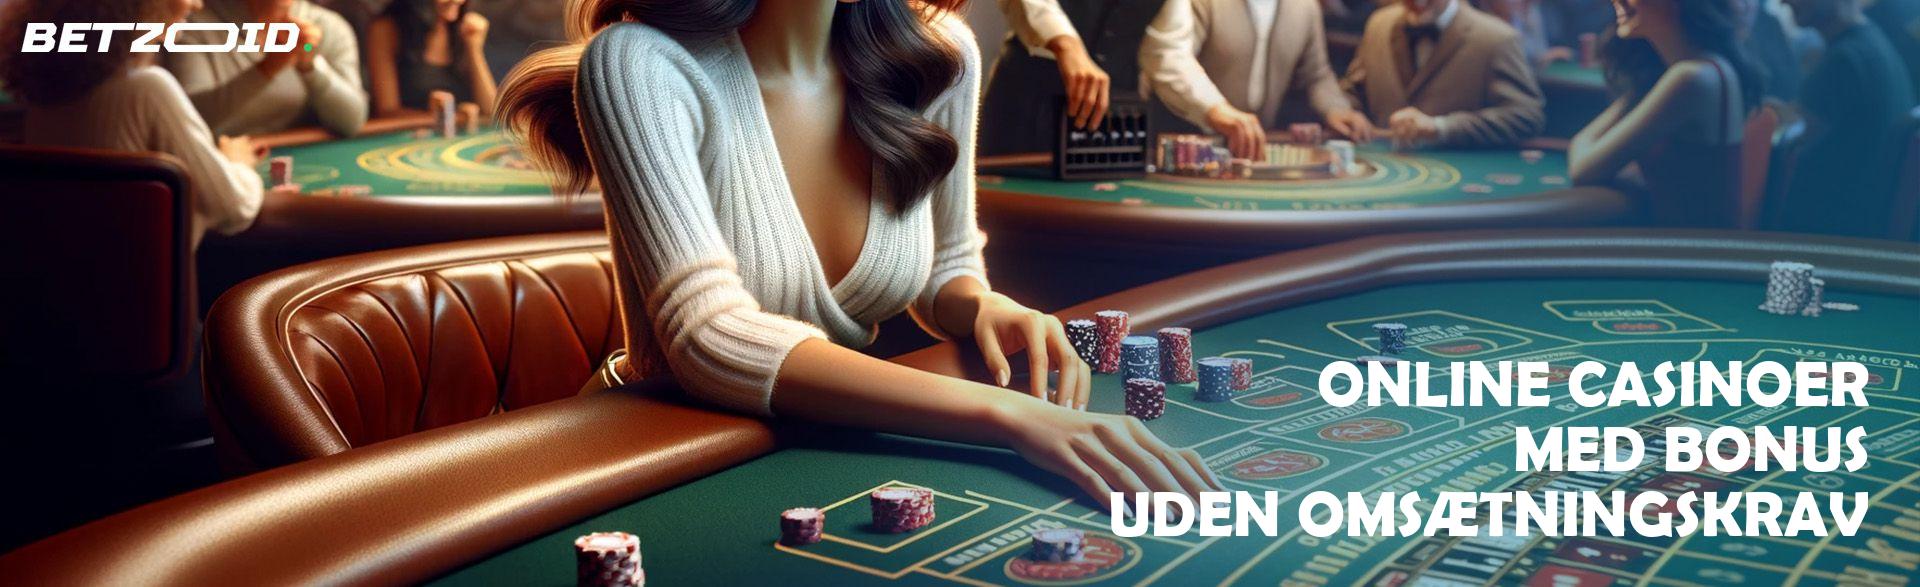 Online Casinoer med Bonus Uden Omsætningskrav.